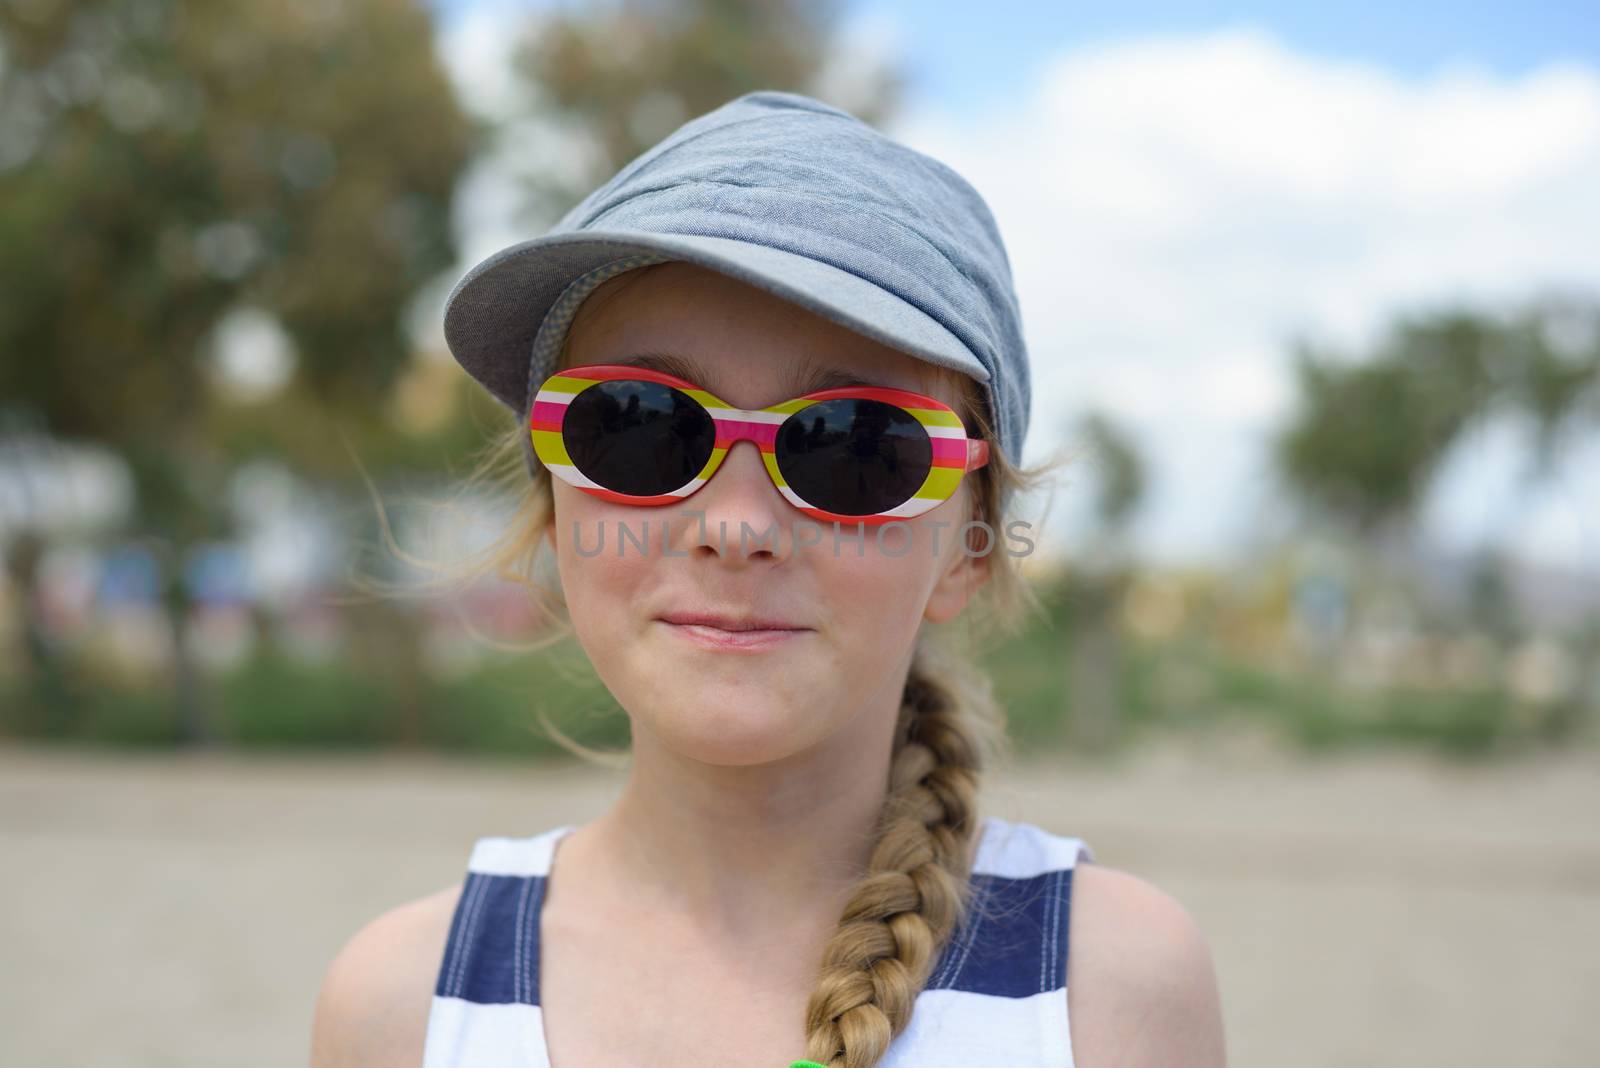 Cute little girl in denim hat and sunglasses